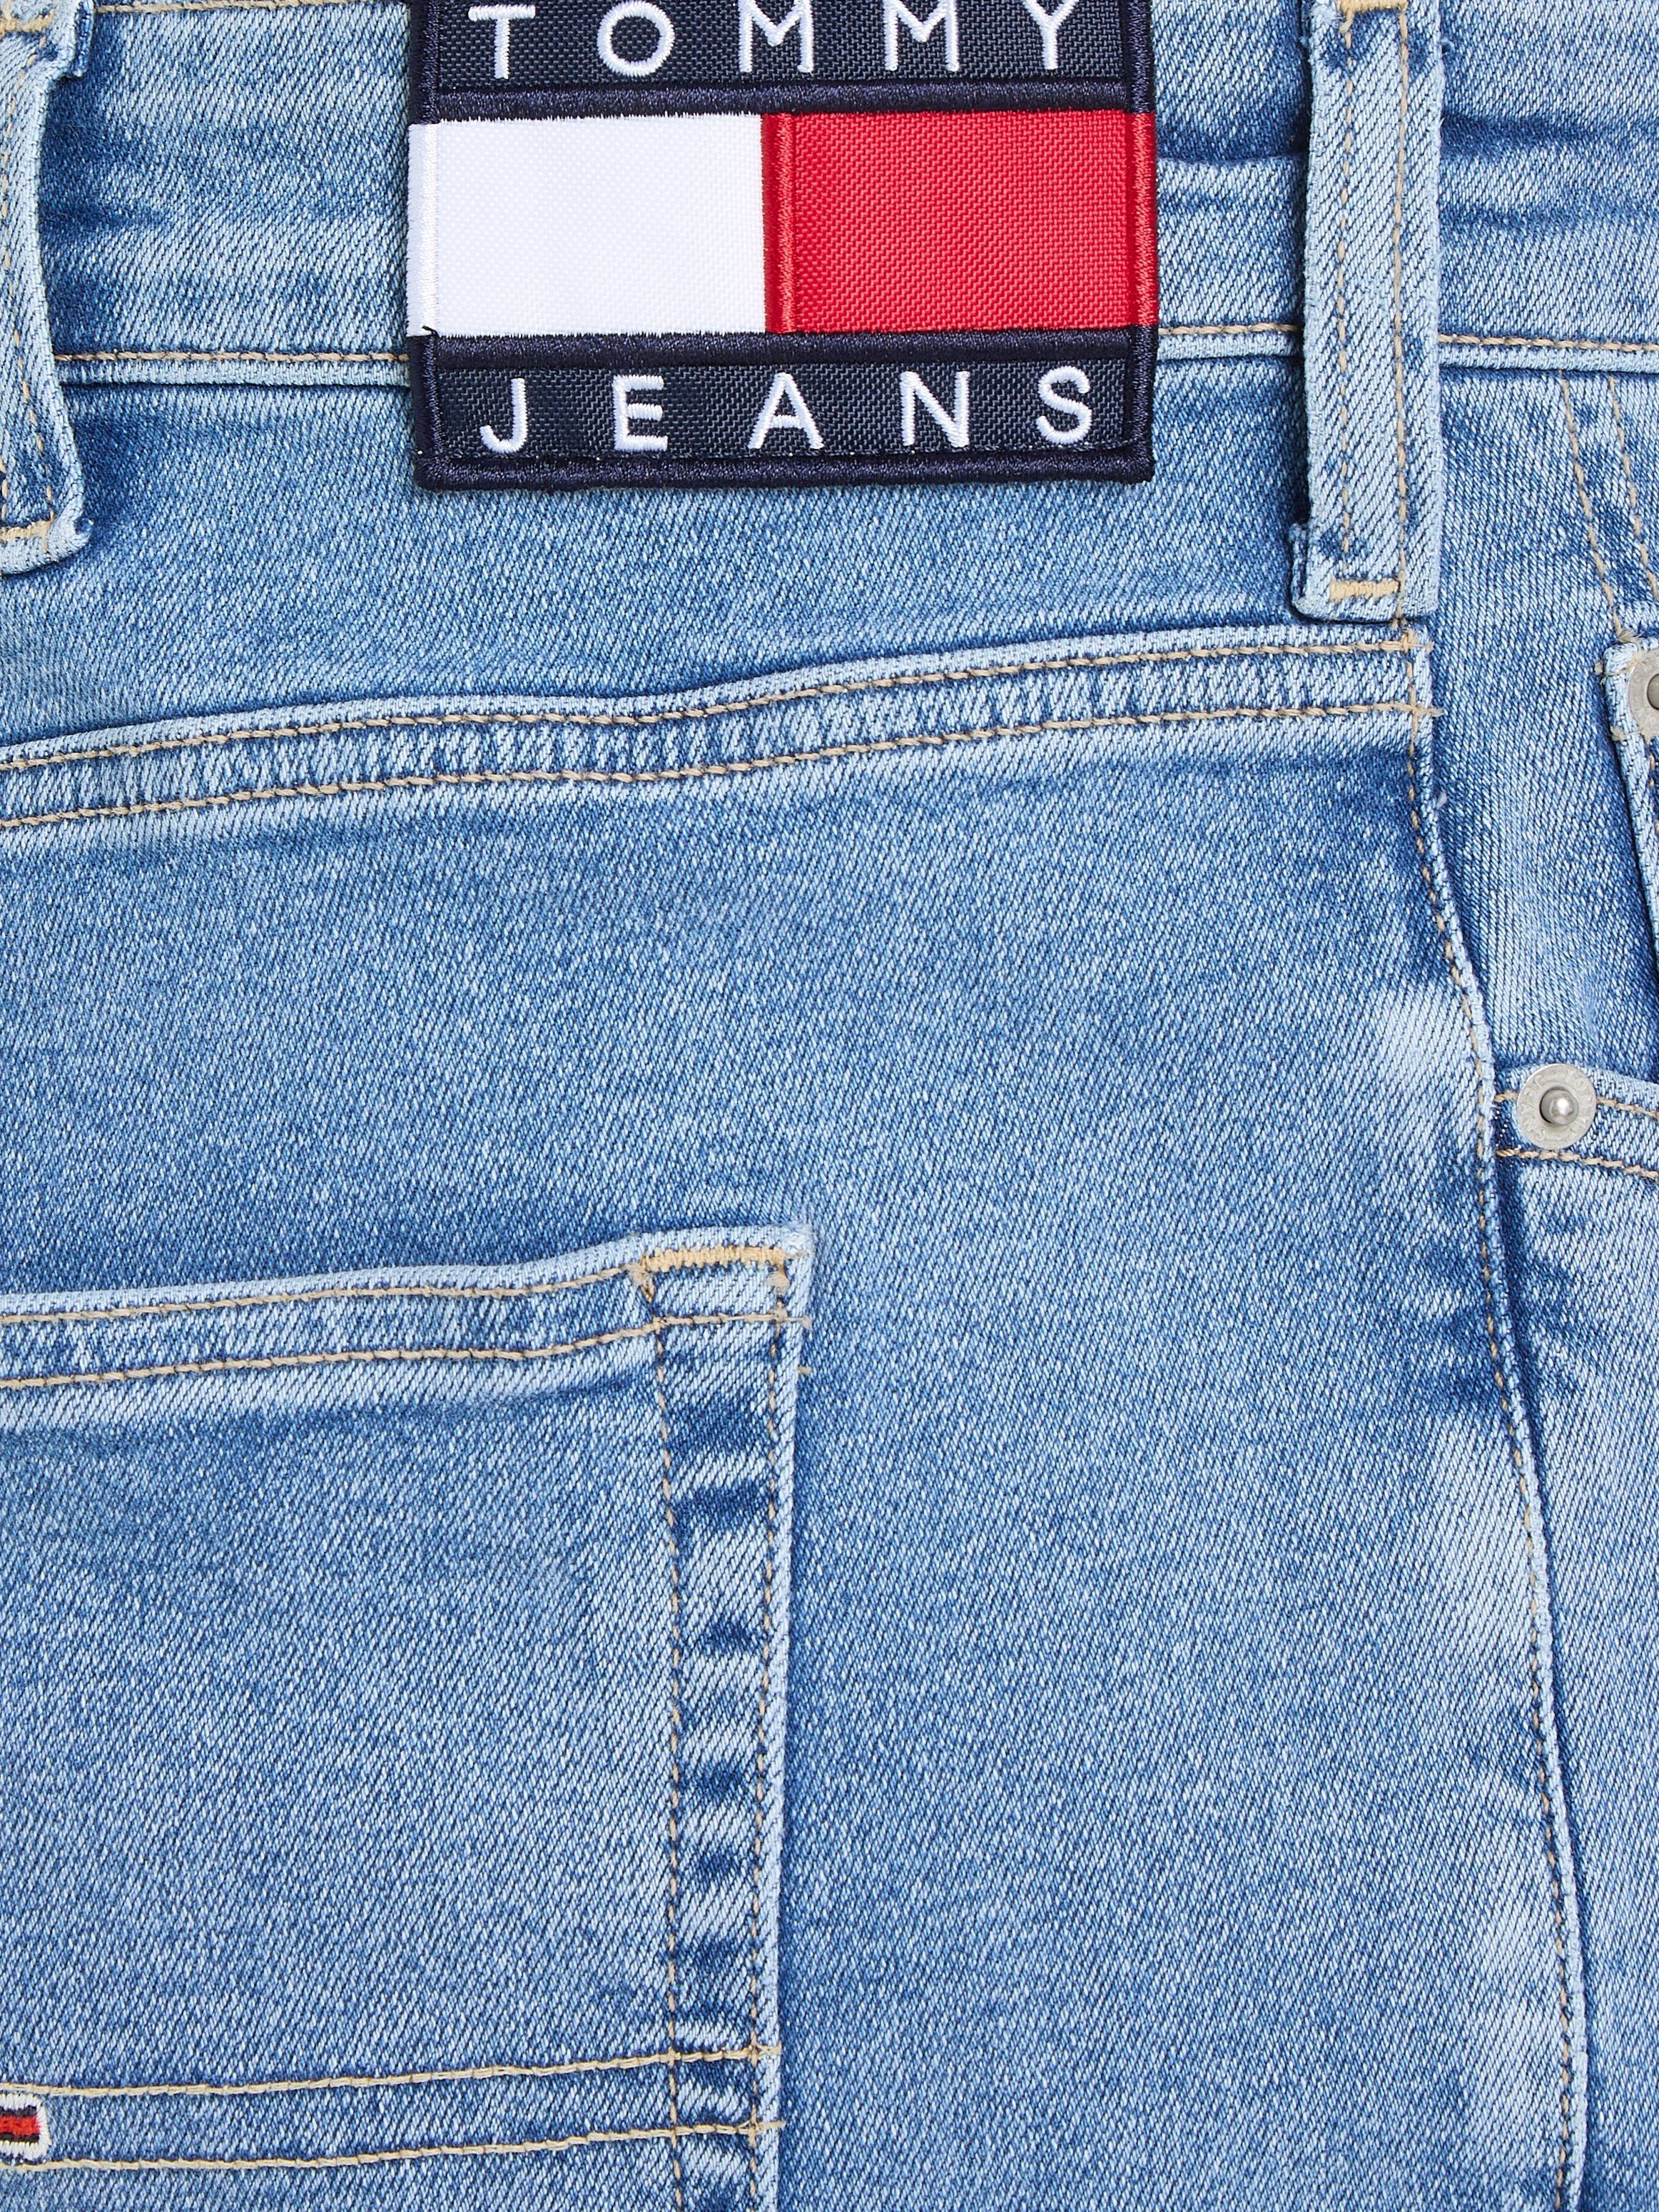 CG4239 Plus PLUS Stretch-Jeans Tommy Jeans SCANTON SLIM